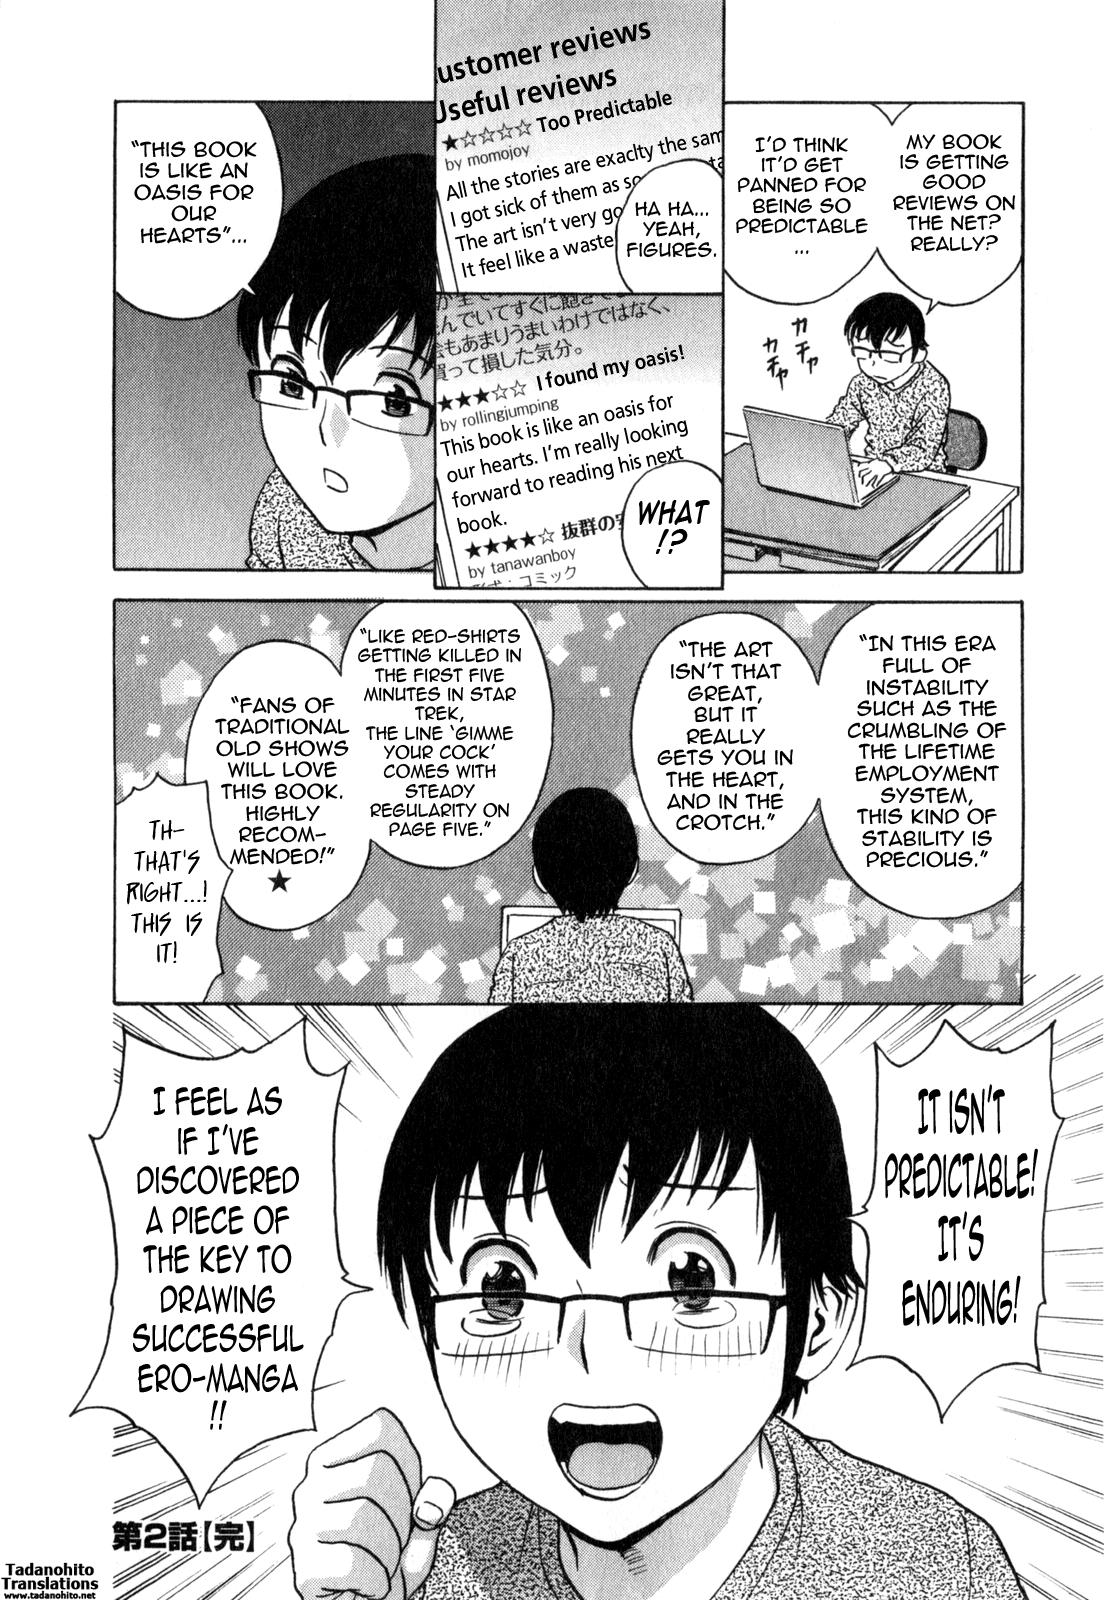 [Hidemaru] Life with Married Women Just Like a Manga 3 - Ch. 1-4 [English] {Tadanohito} 44